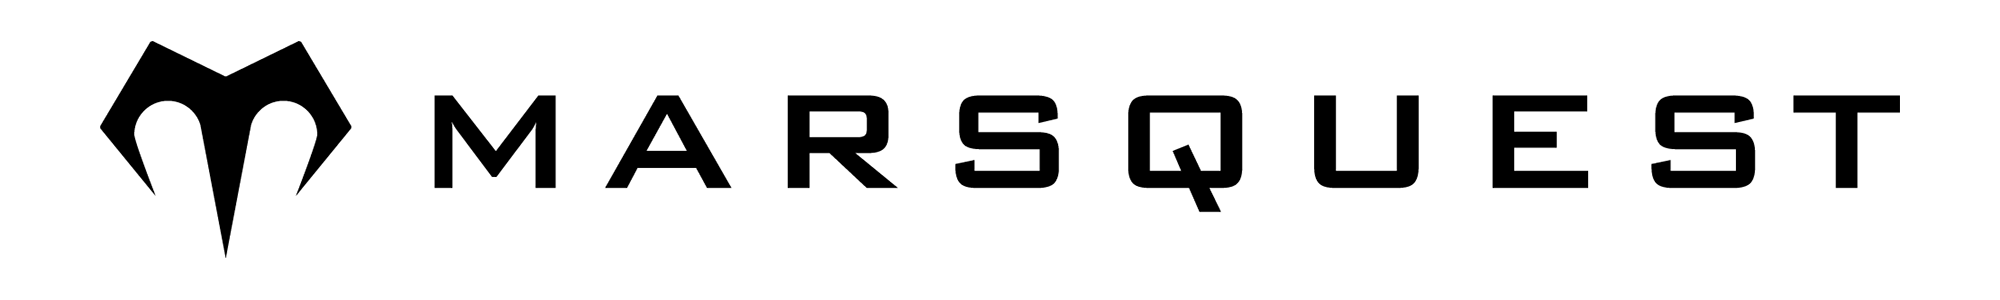 logo_horizontal_black